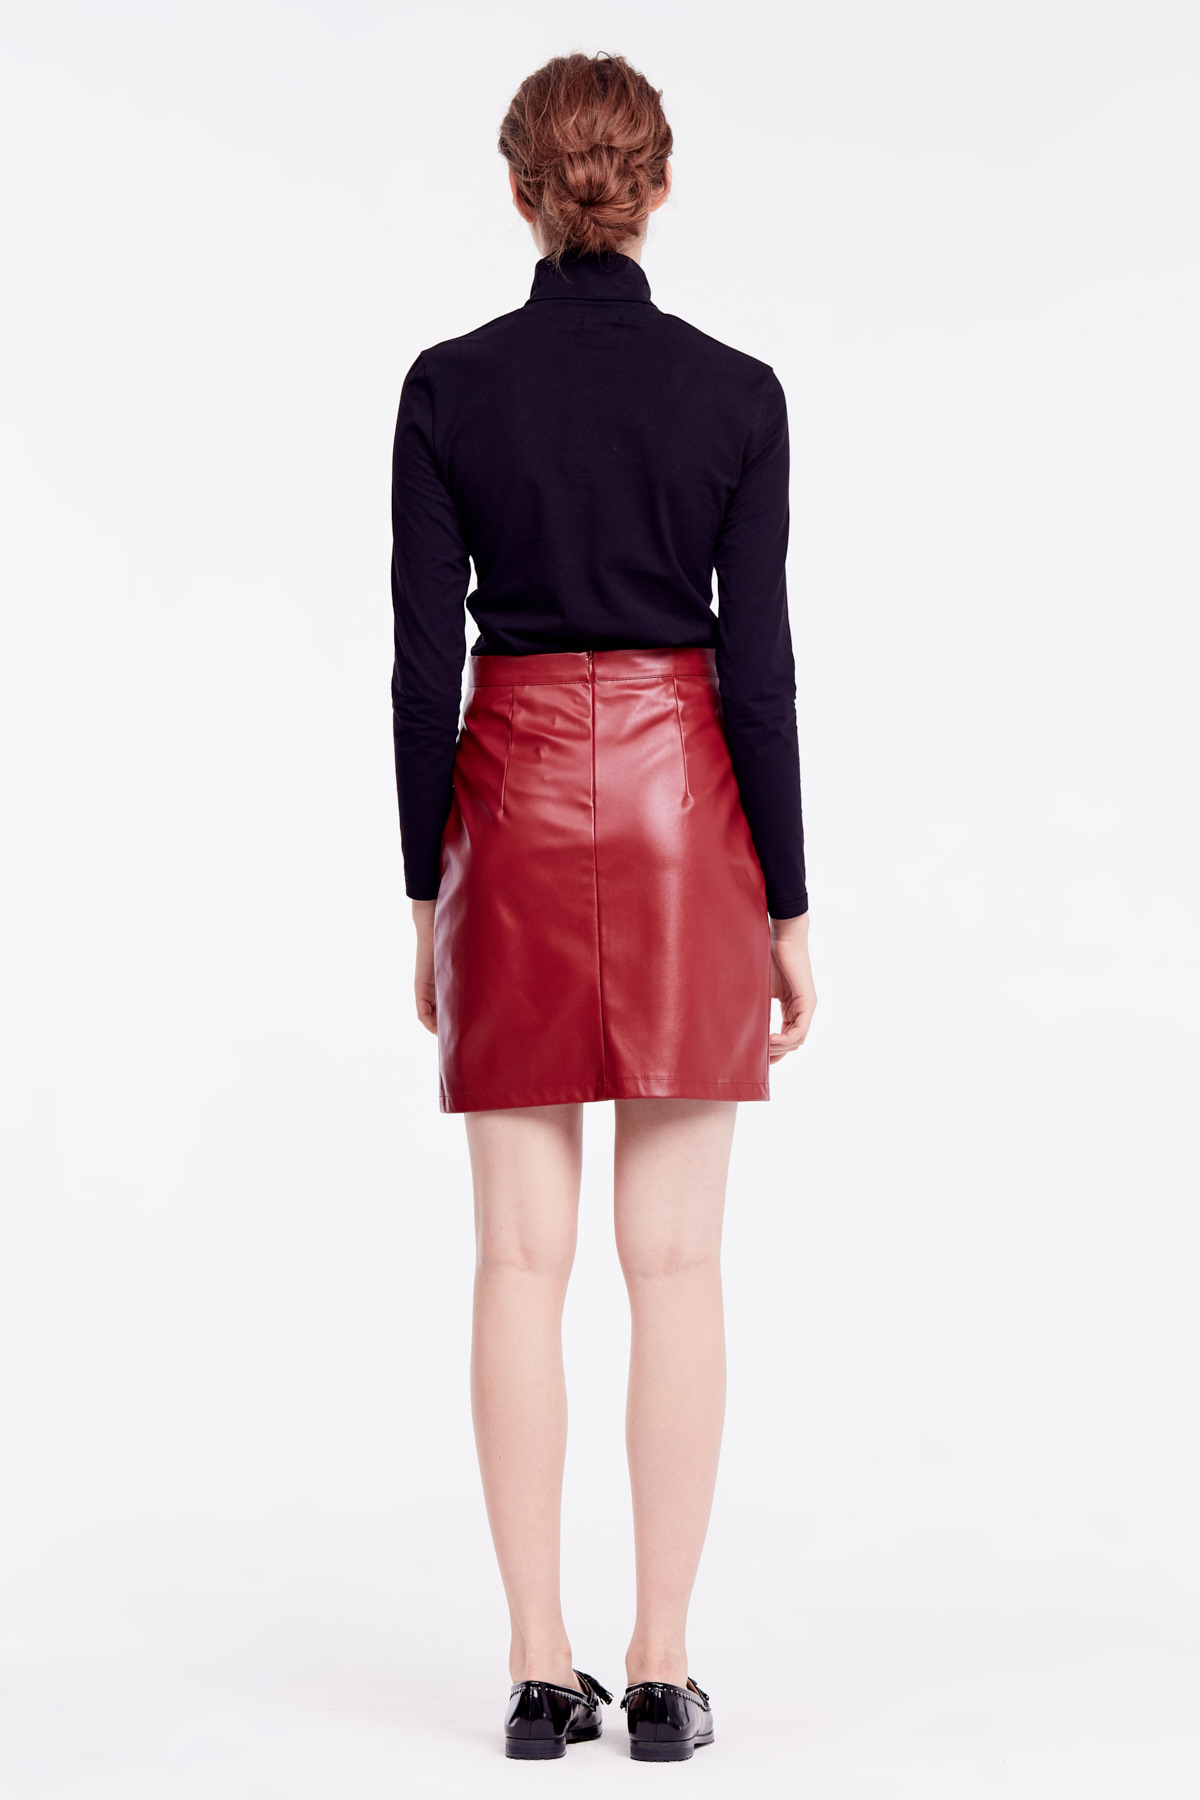 Short burgundy leather skirt, photo 5